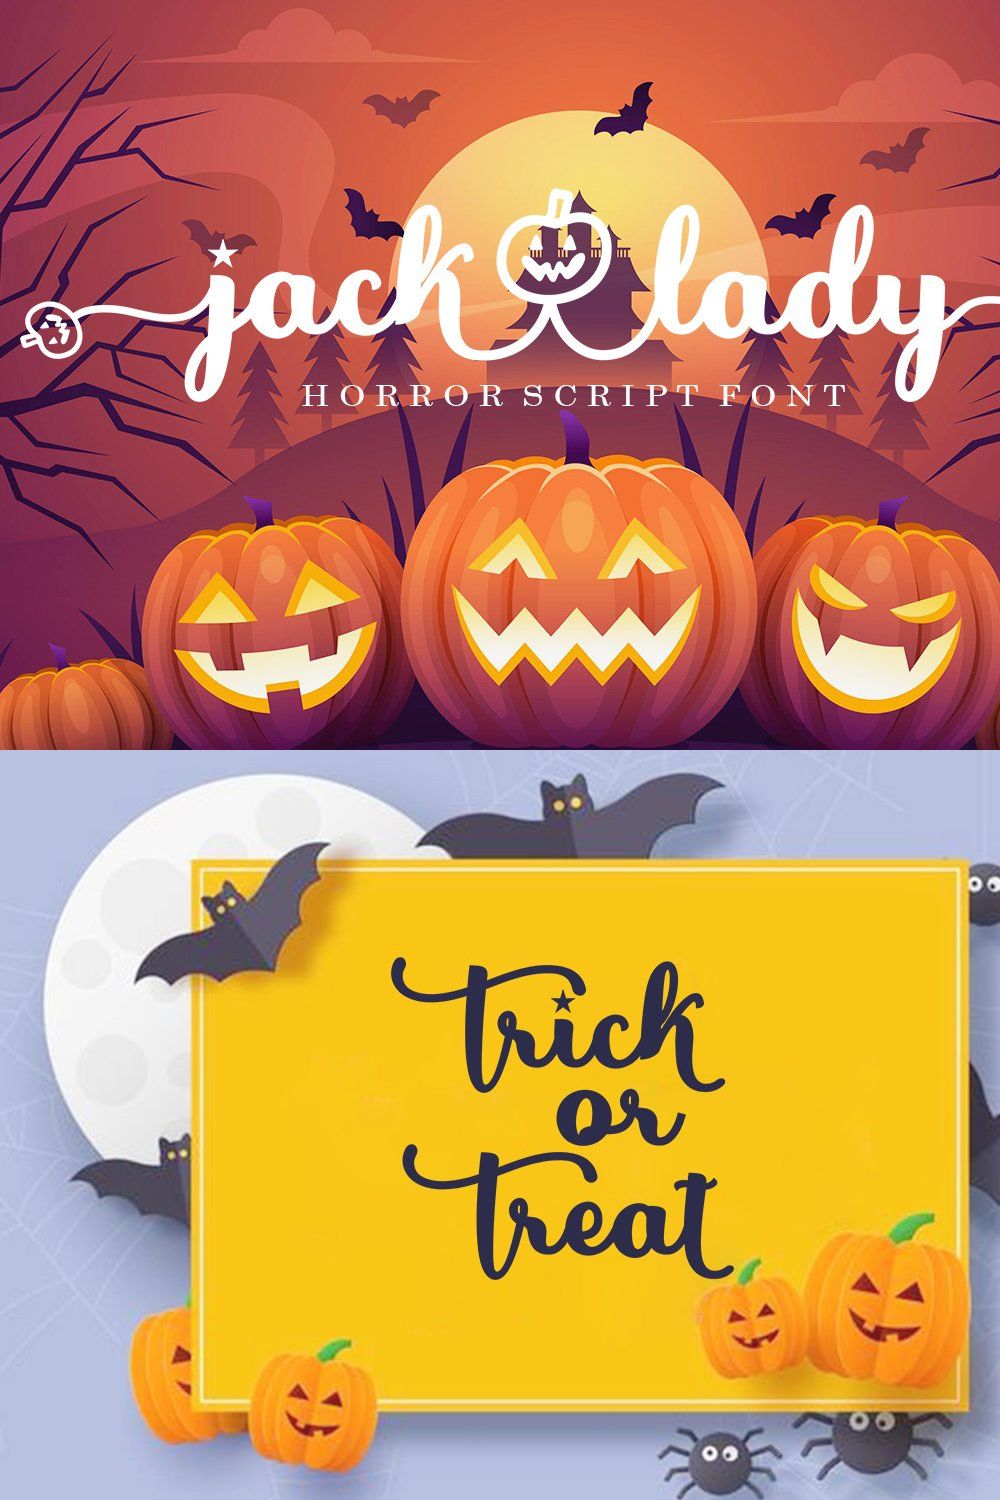 Jack Lady Halloween Font pinterest preview image.